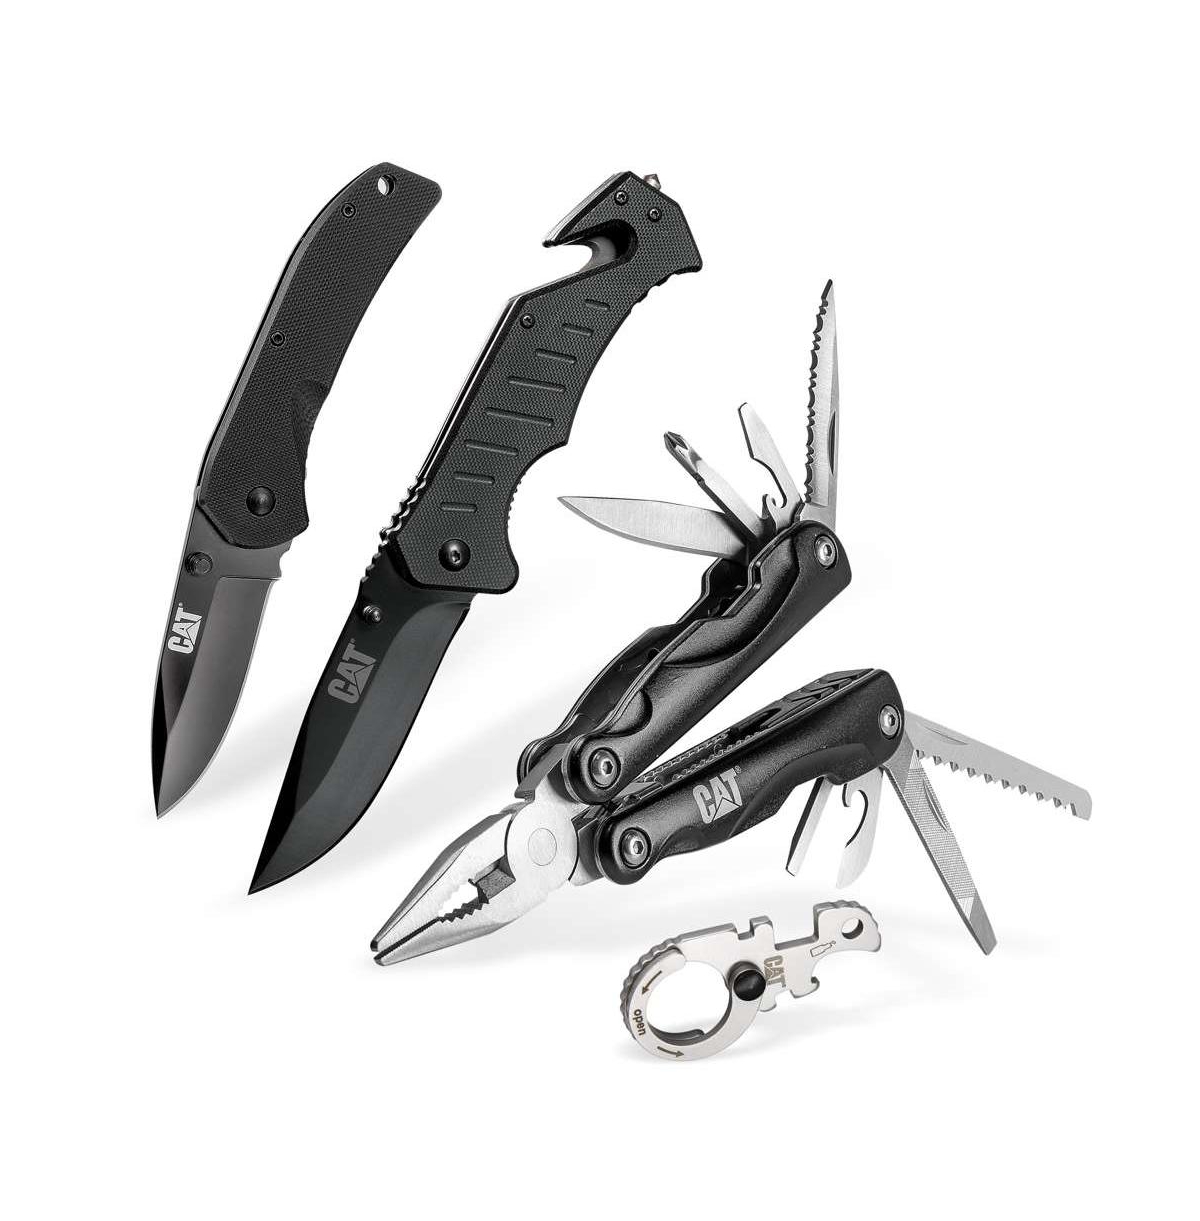 4 pc Multi-Tool and Folding Pocket Black Knife Set with Keychain Tool - Black